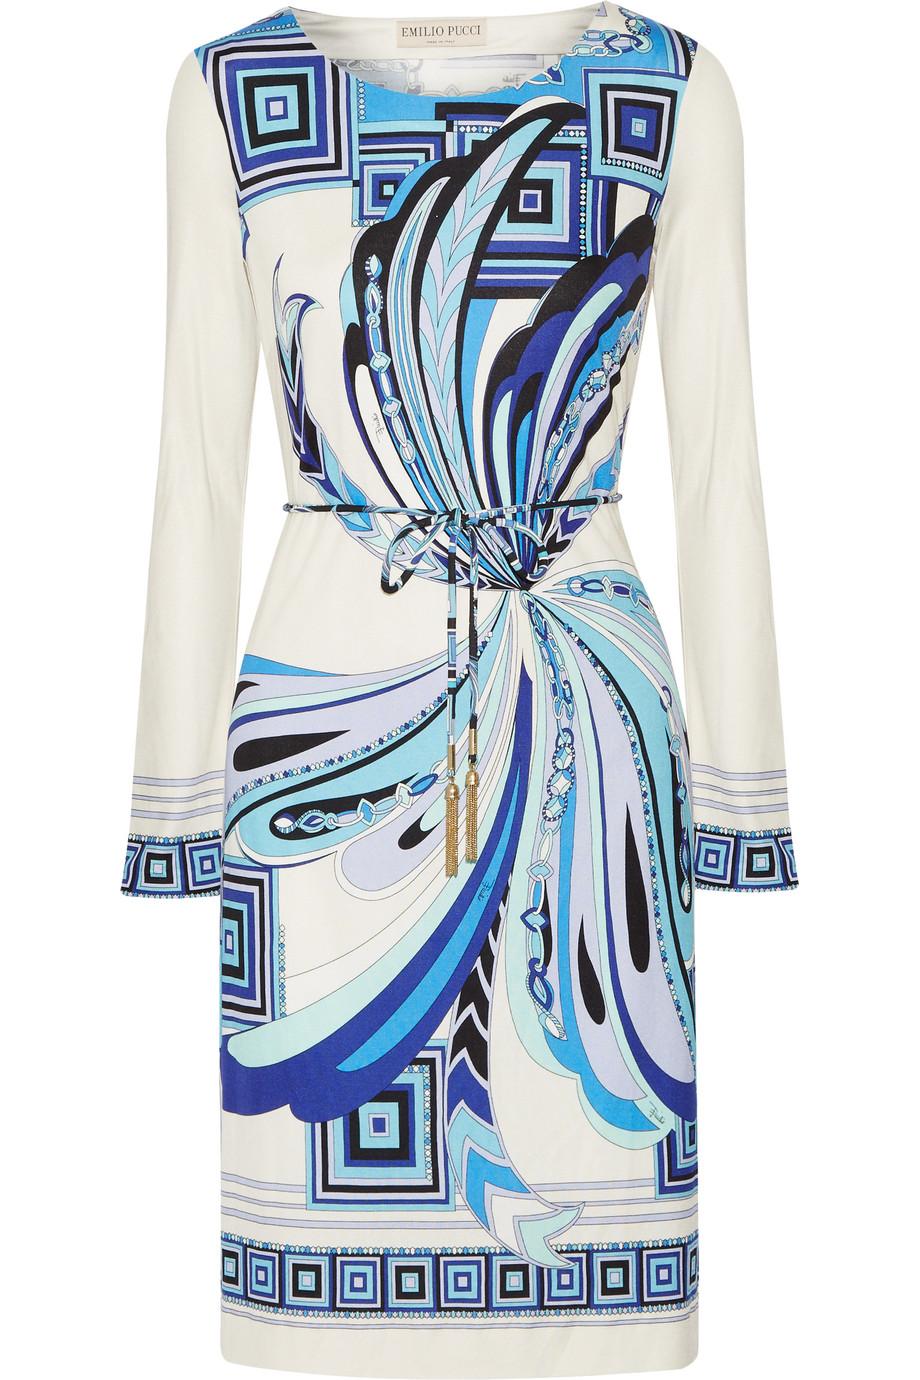 UNWORN Emilio Pucci Whites & Blues Signature Print Silk Dress with Belt 48 For Sale 11